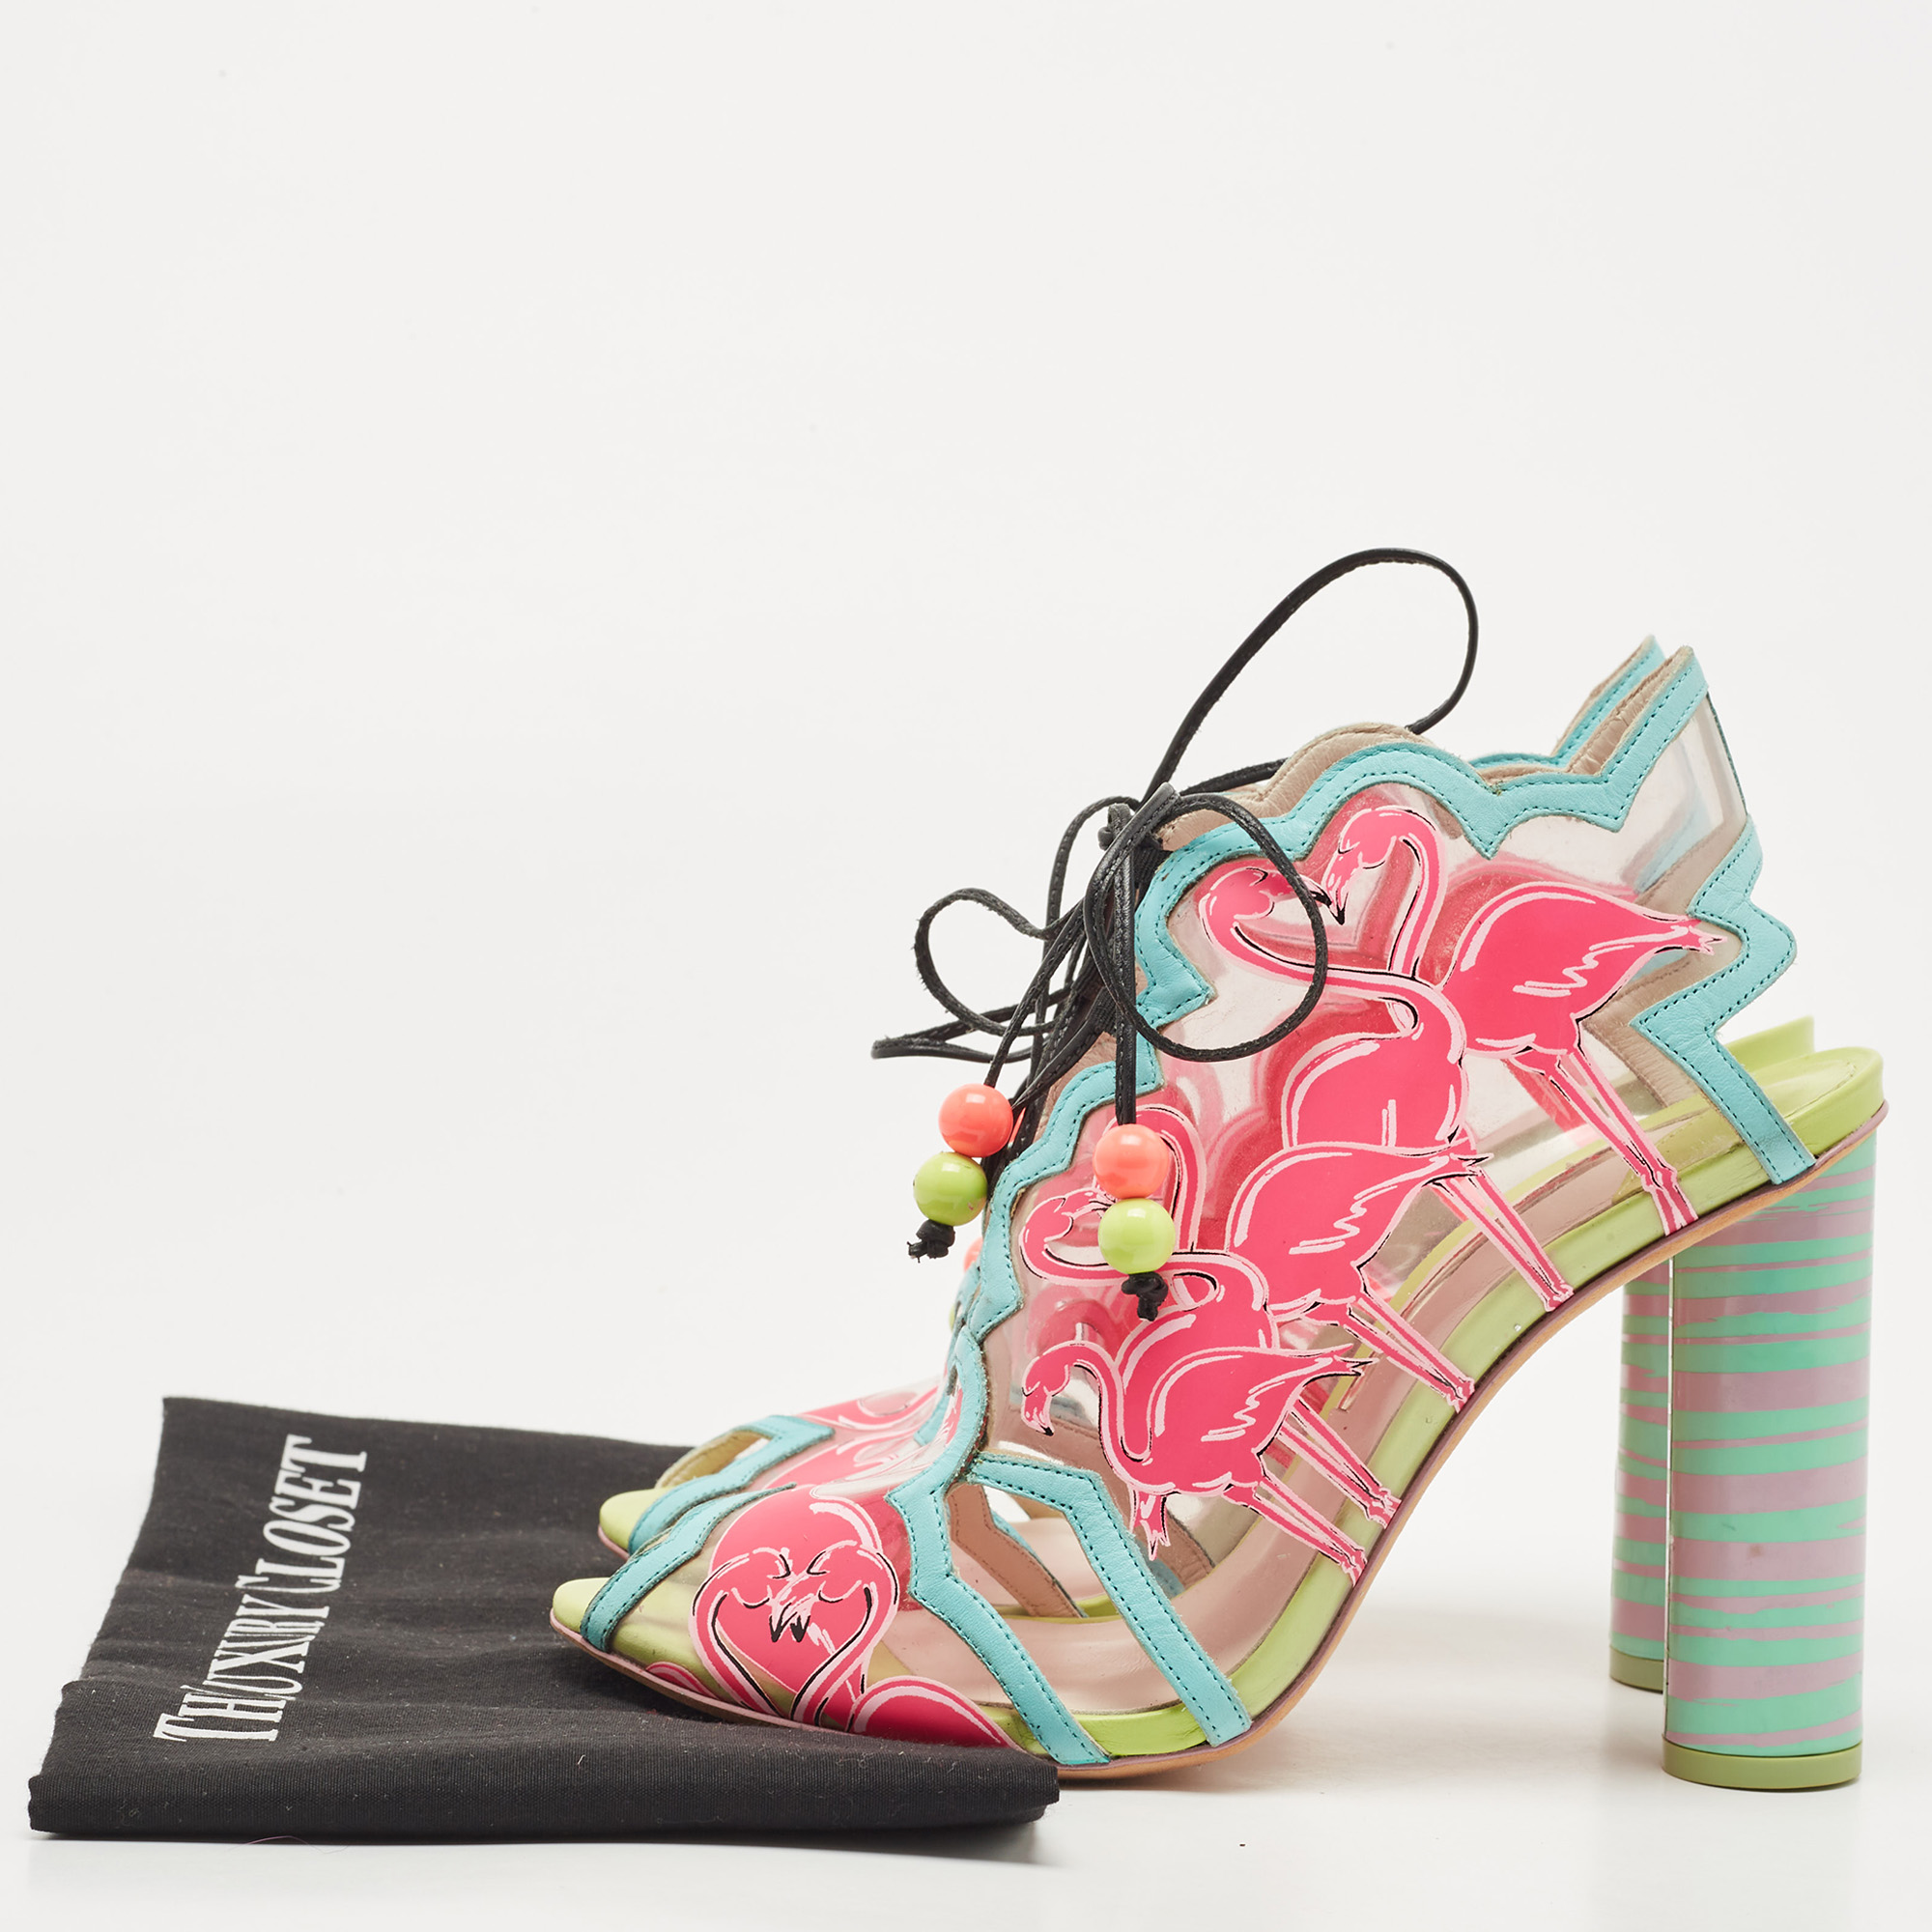 Sophia Webster Multicolor PVC And Leather Trim Flamingo Ankle Wrap Sandals Size 39